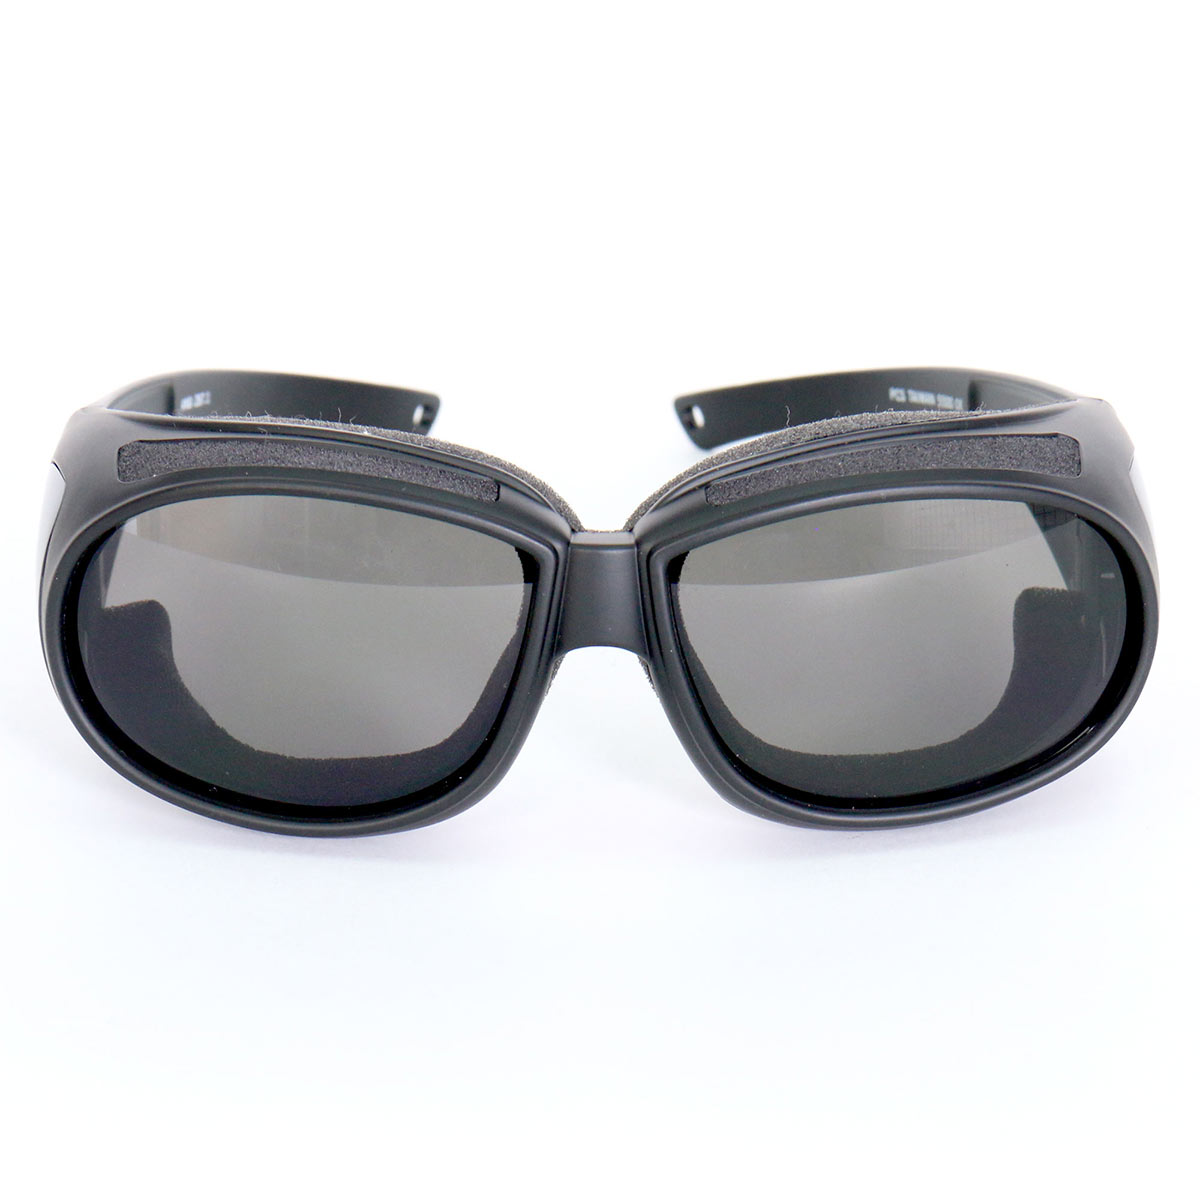 Hot Leathers SGF1074 Smoke Defender Foam Padded Glasses